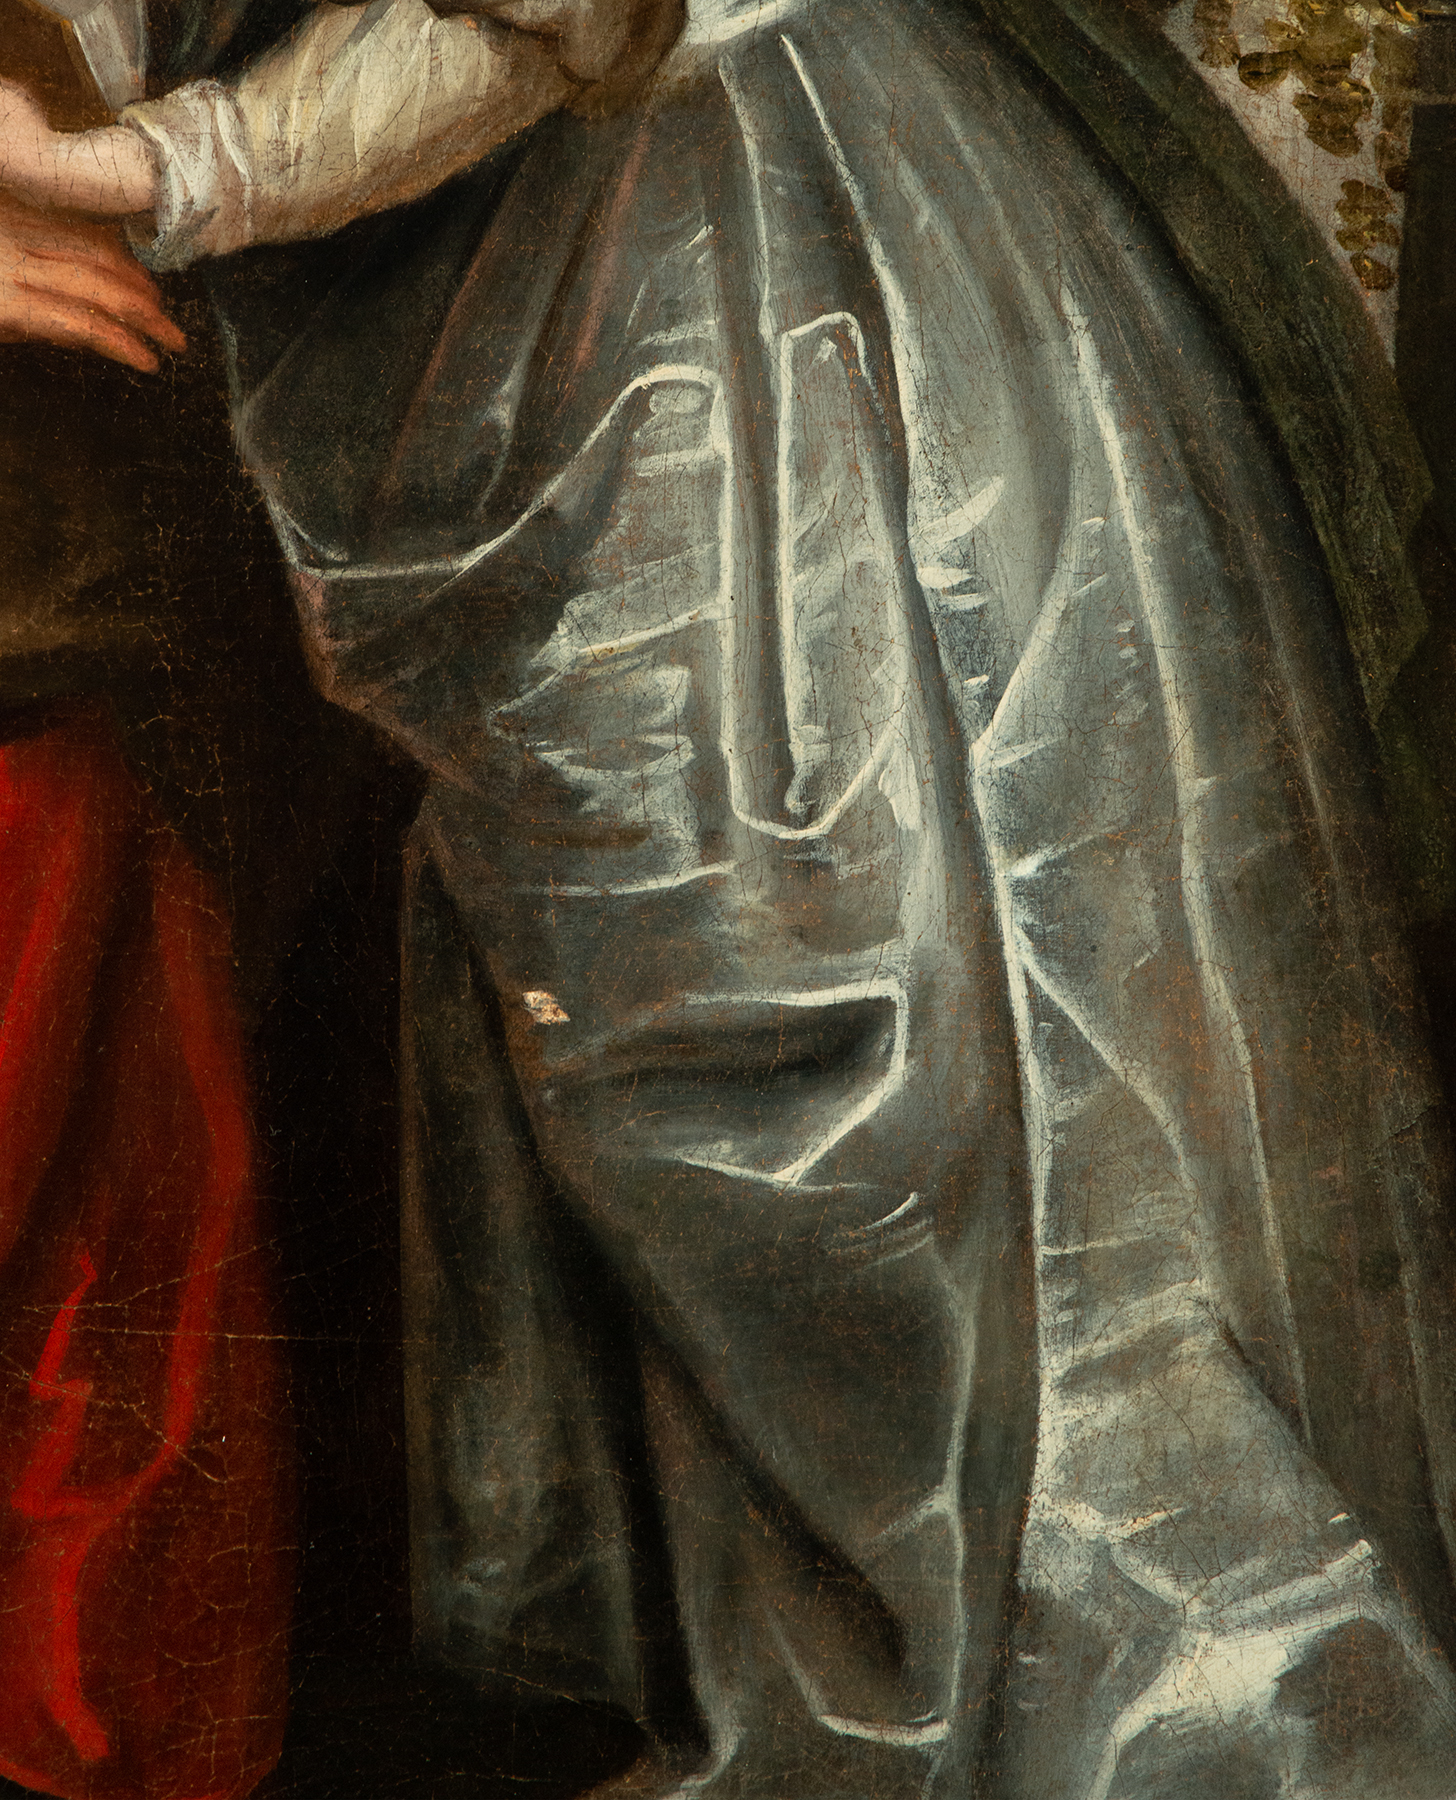 The Education of the Virgin, follower of Sir Peter Paul Rubens, 17th century Flemish school - Image 4 of 5